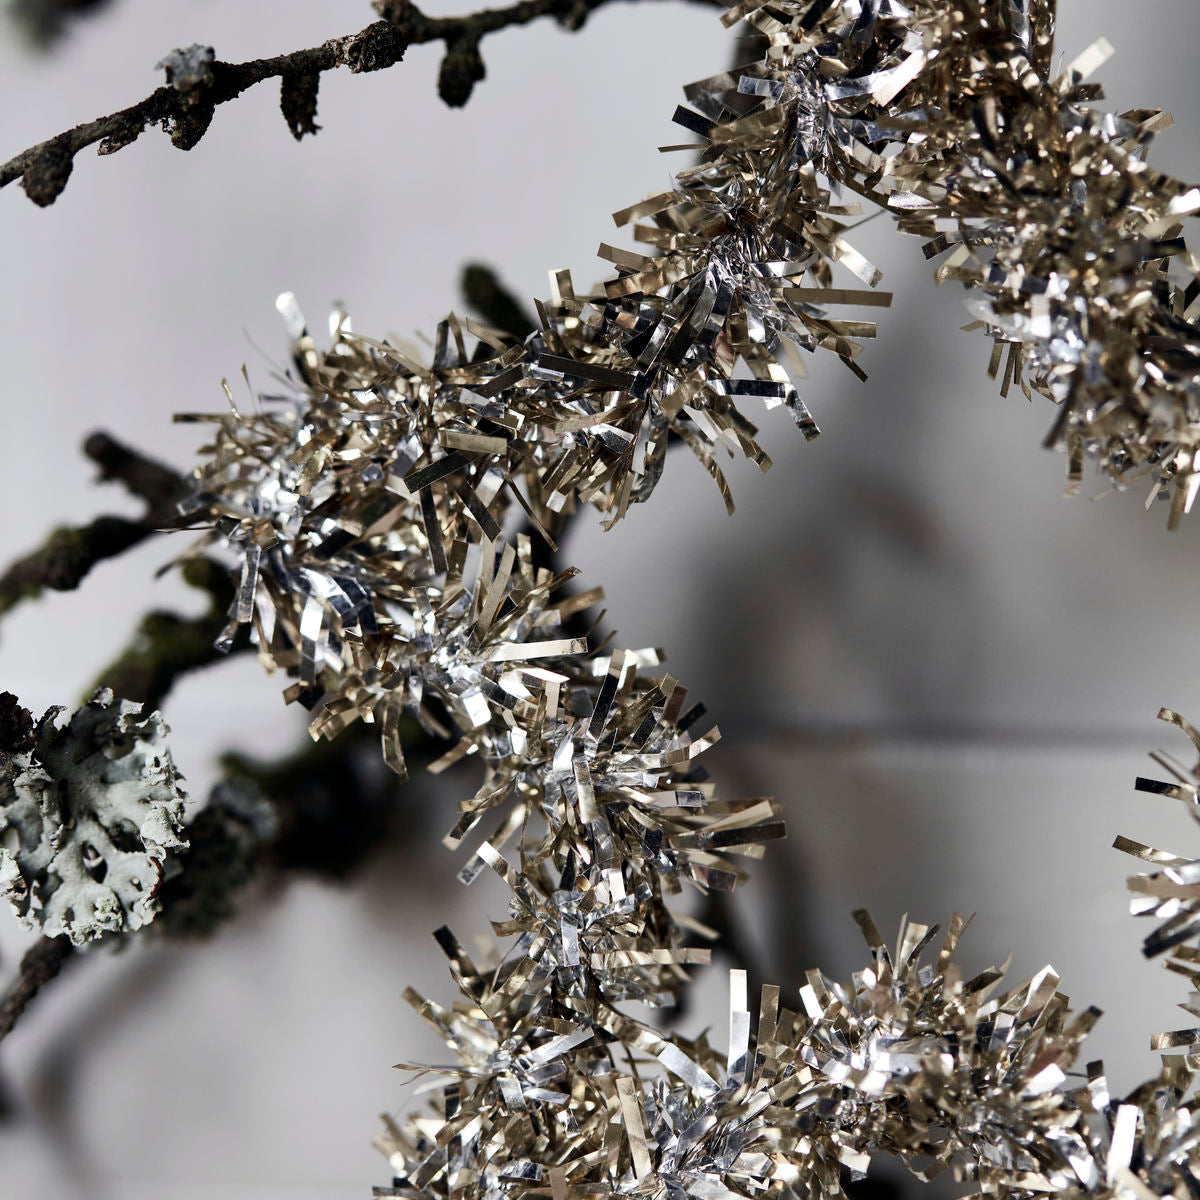 Ornament - Joy Star, Silber oxidiert